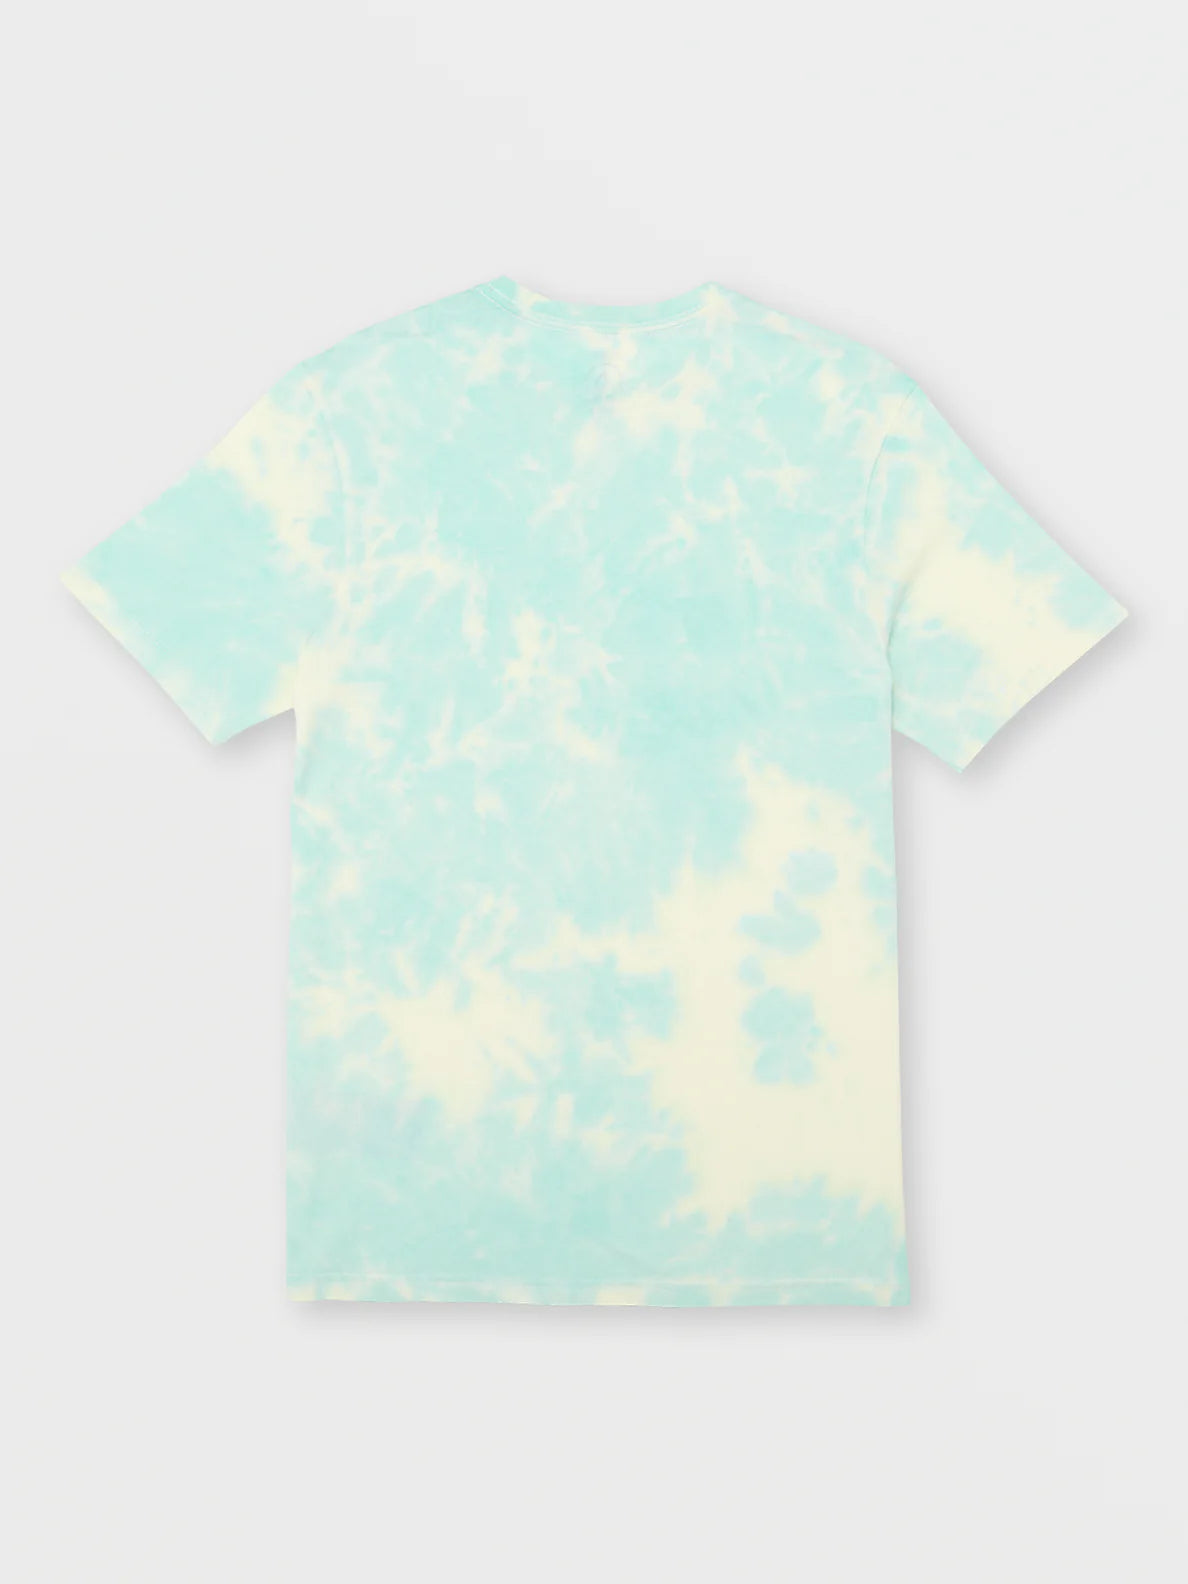 Camiseta Volcom Iconic Stone Dye - Ice | Camisetas de hombre | Camisetas manga corta de hombre | Volcom Shop | surfdevils.com